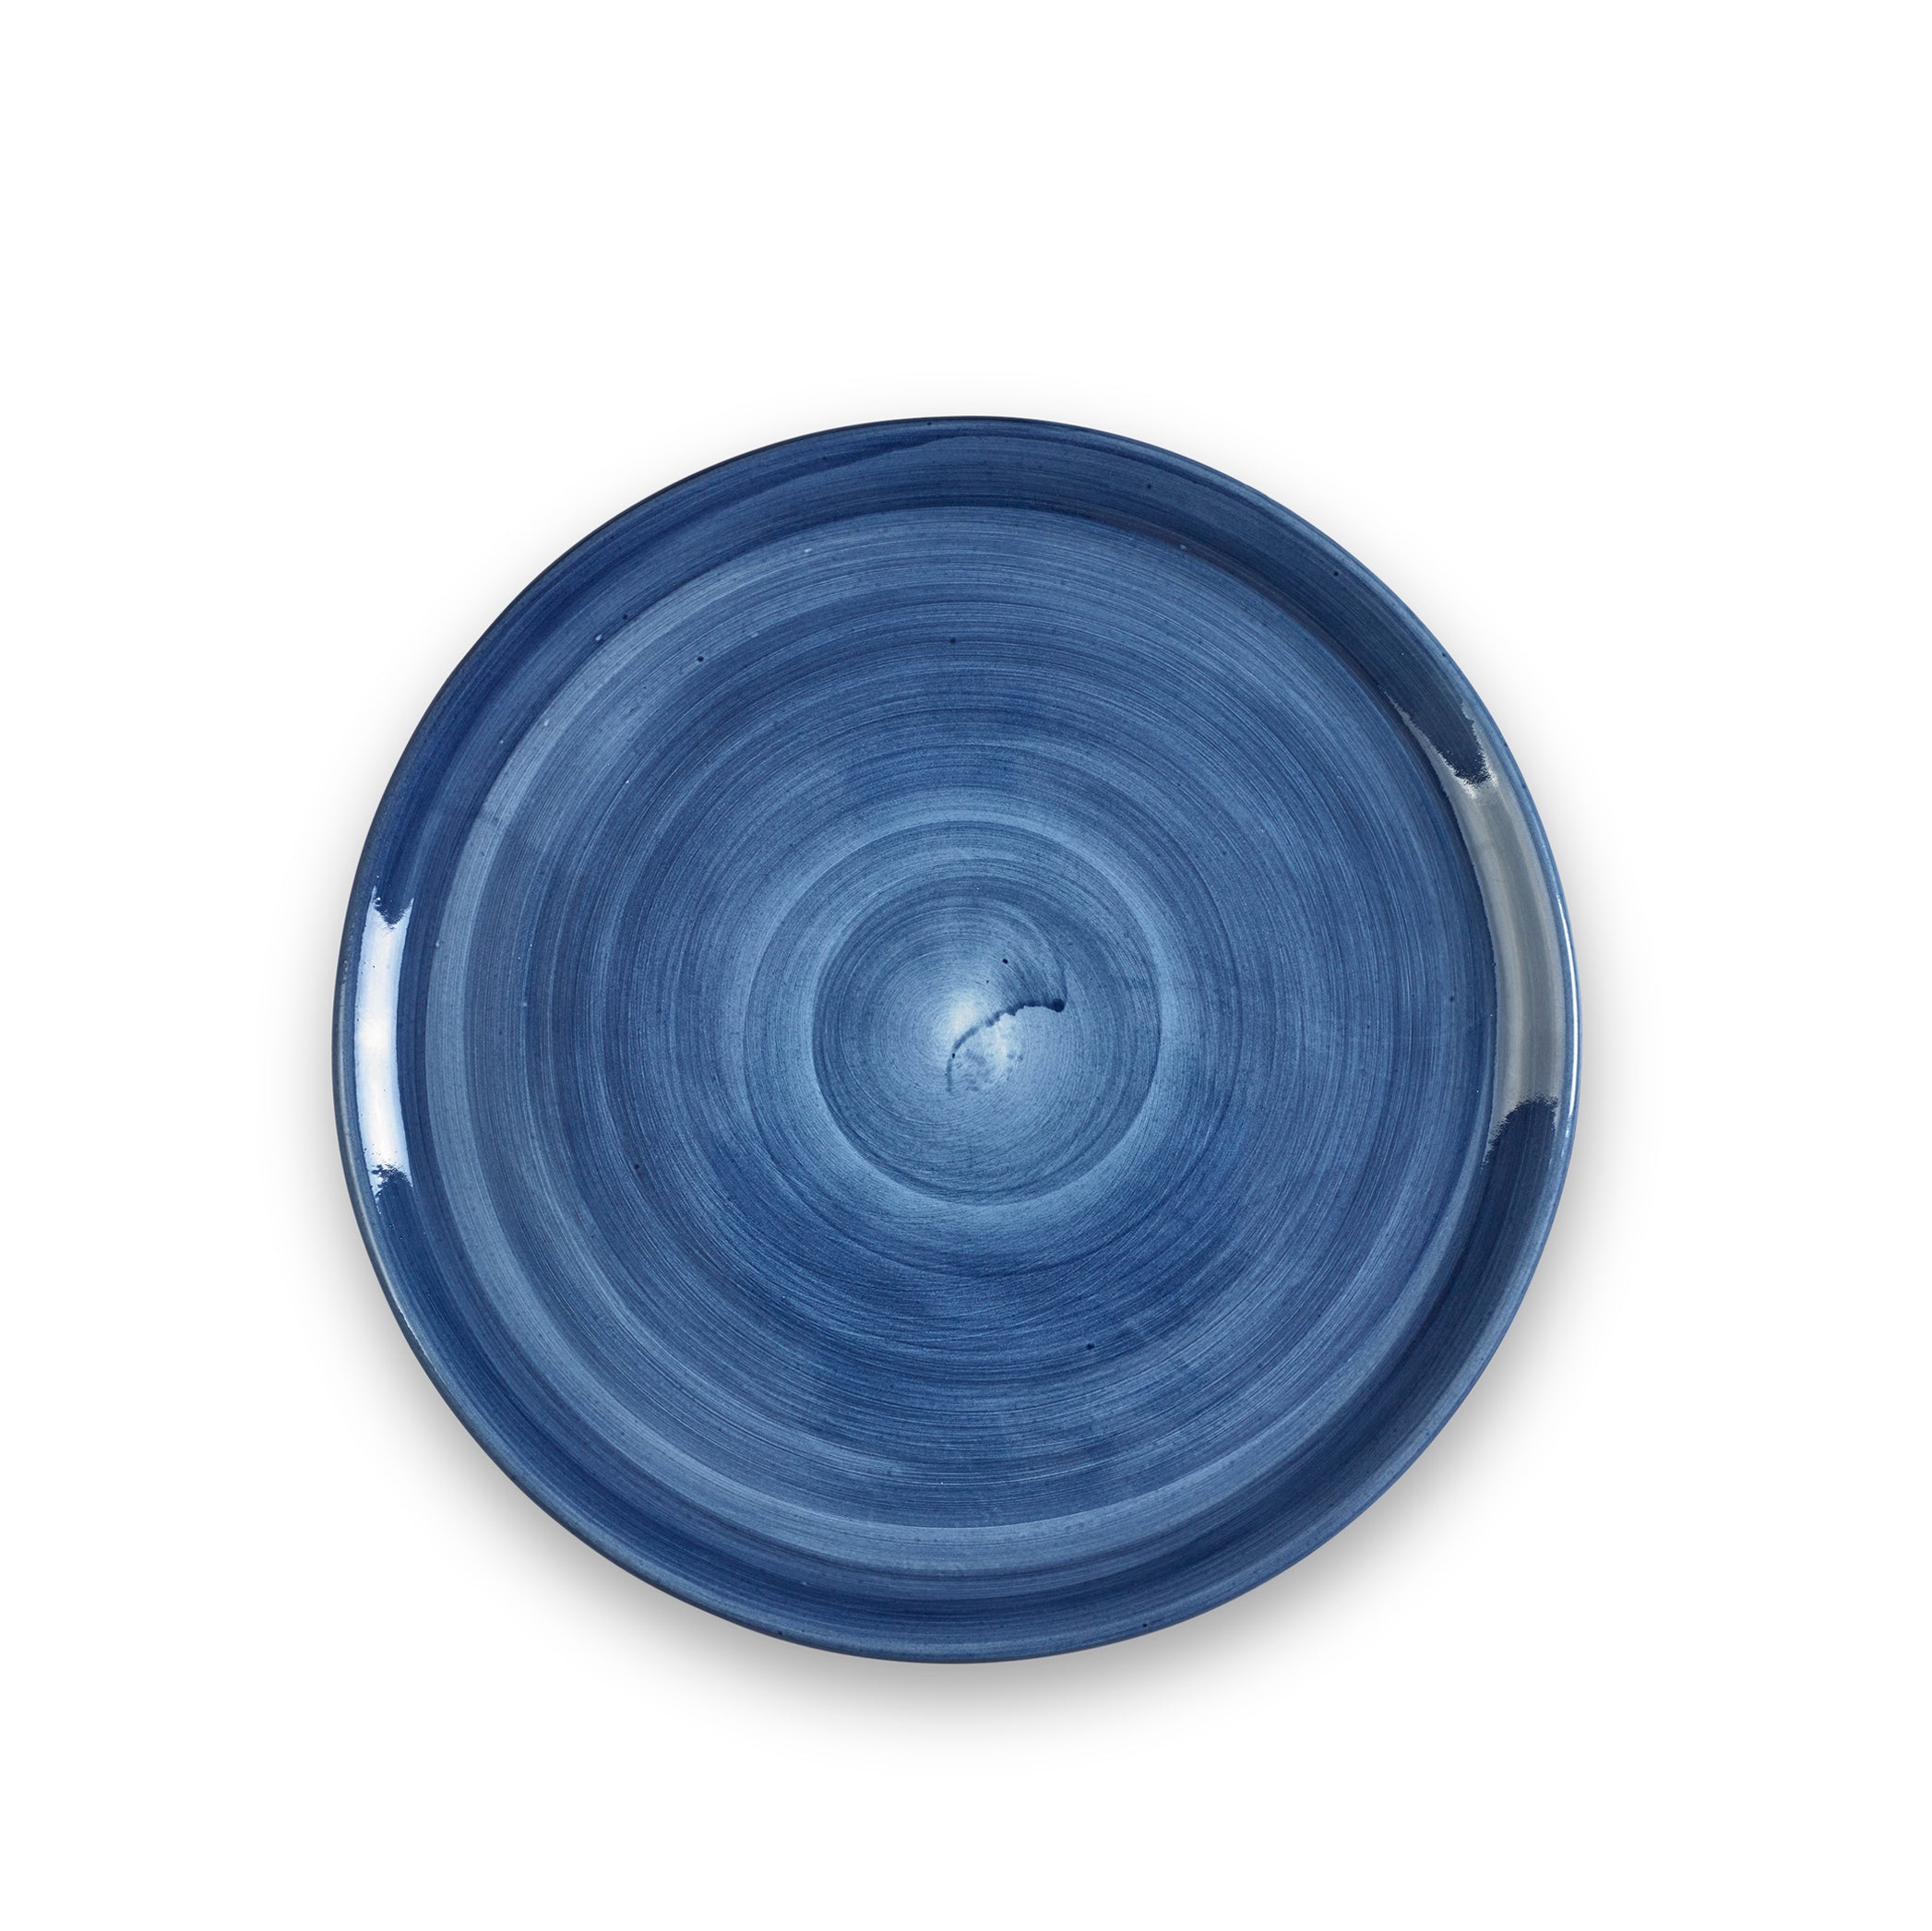 S&B "La Couronne" 29cm Ceramic Tart / Cake Plate in Blue